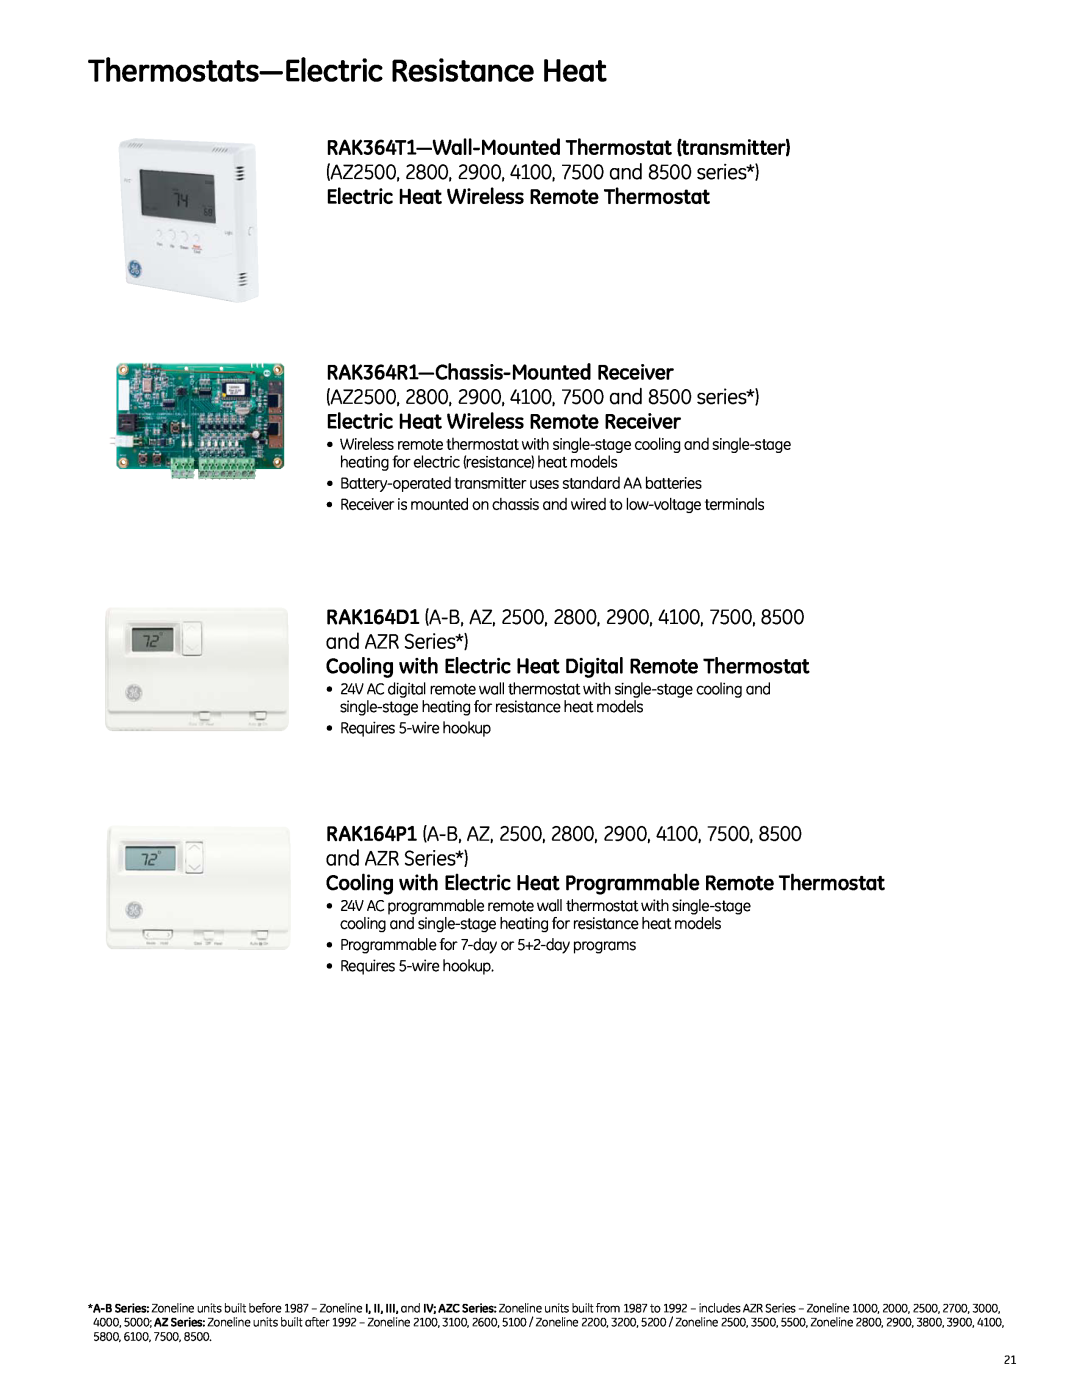 GE 2010 Thermostats-ElectricResistance Heat, RAK364T1-Wall-MountedThermostat transmitter, RAK364R1-Chassis-MountedReceiver 